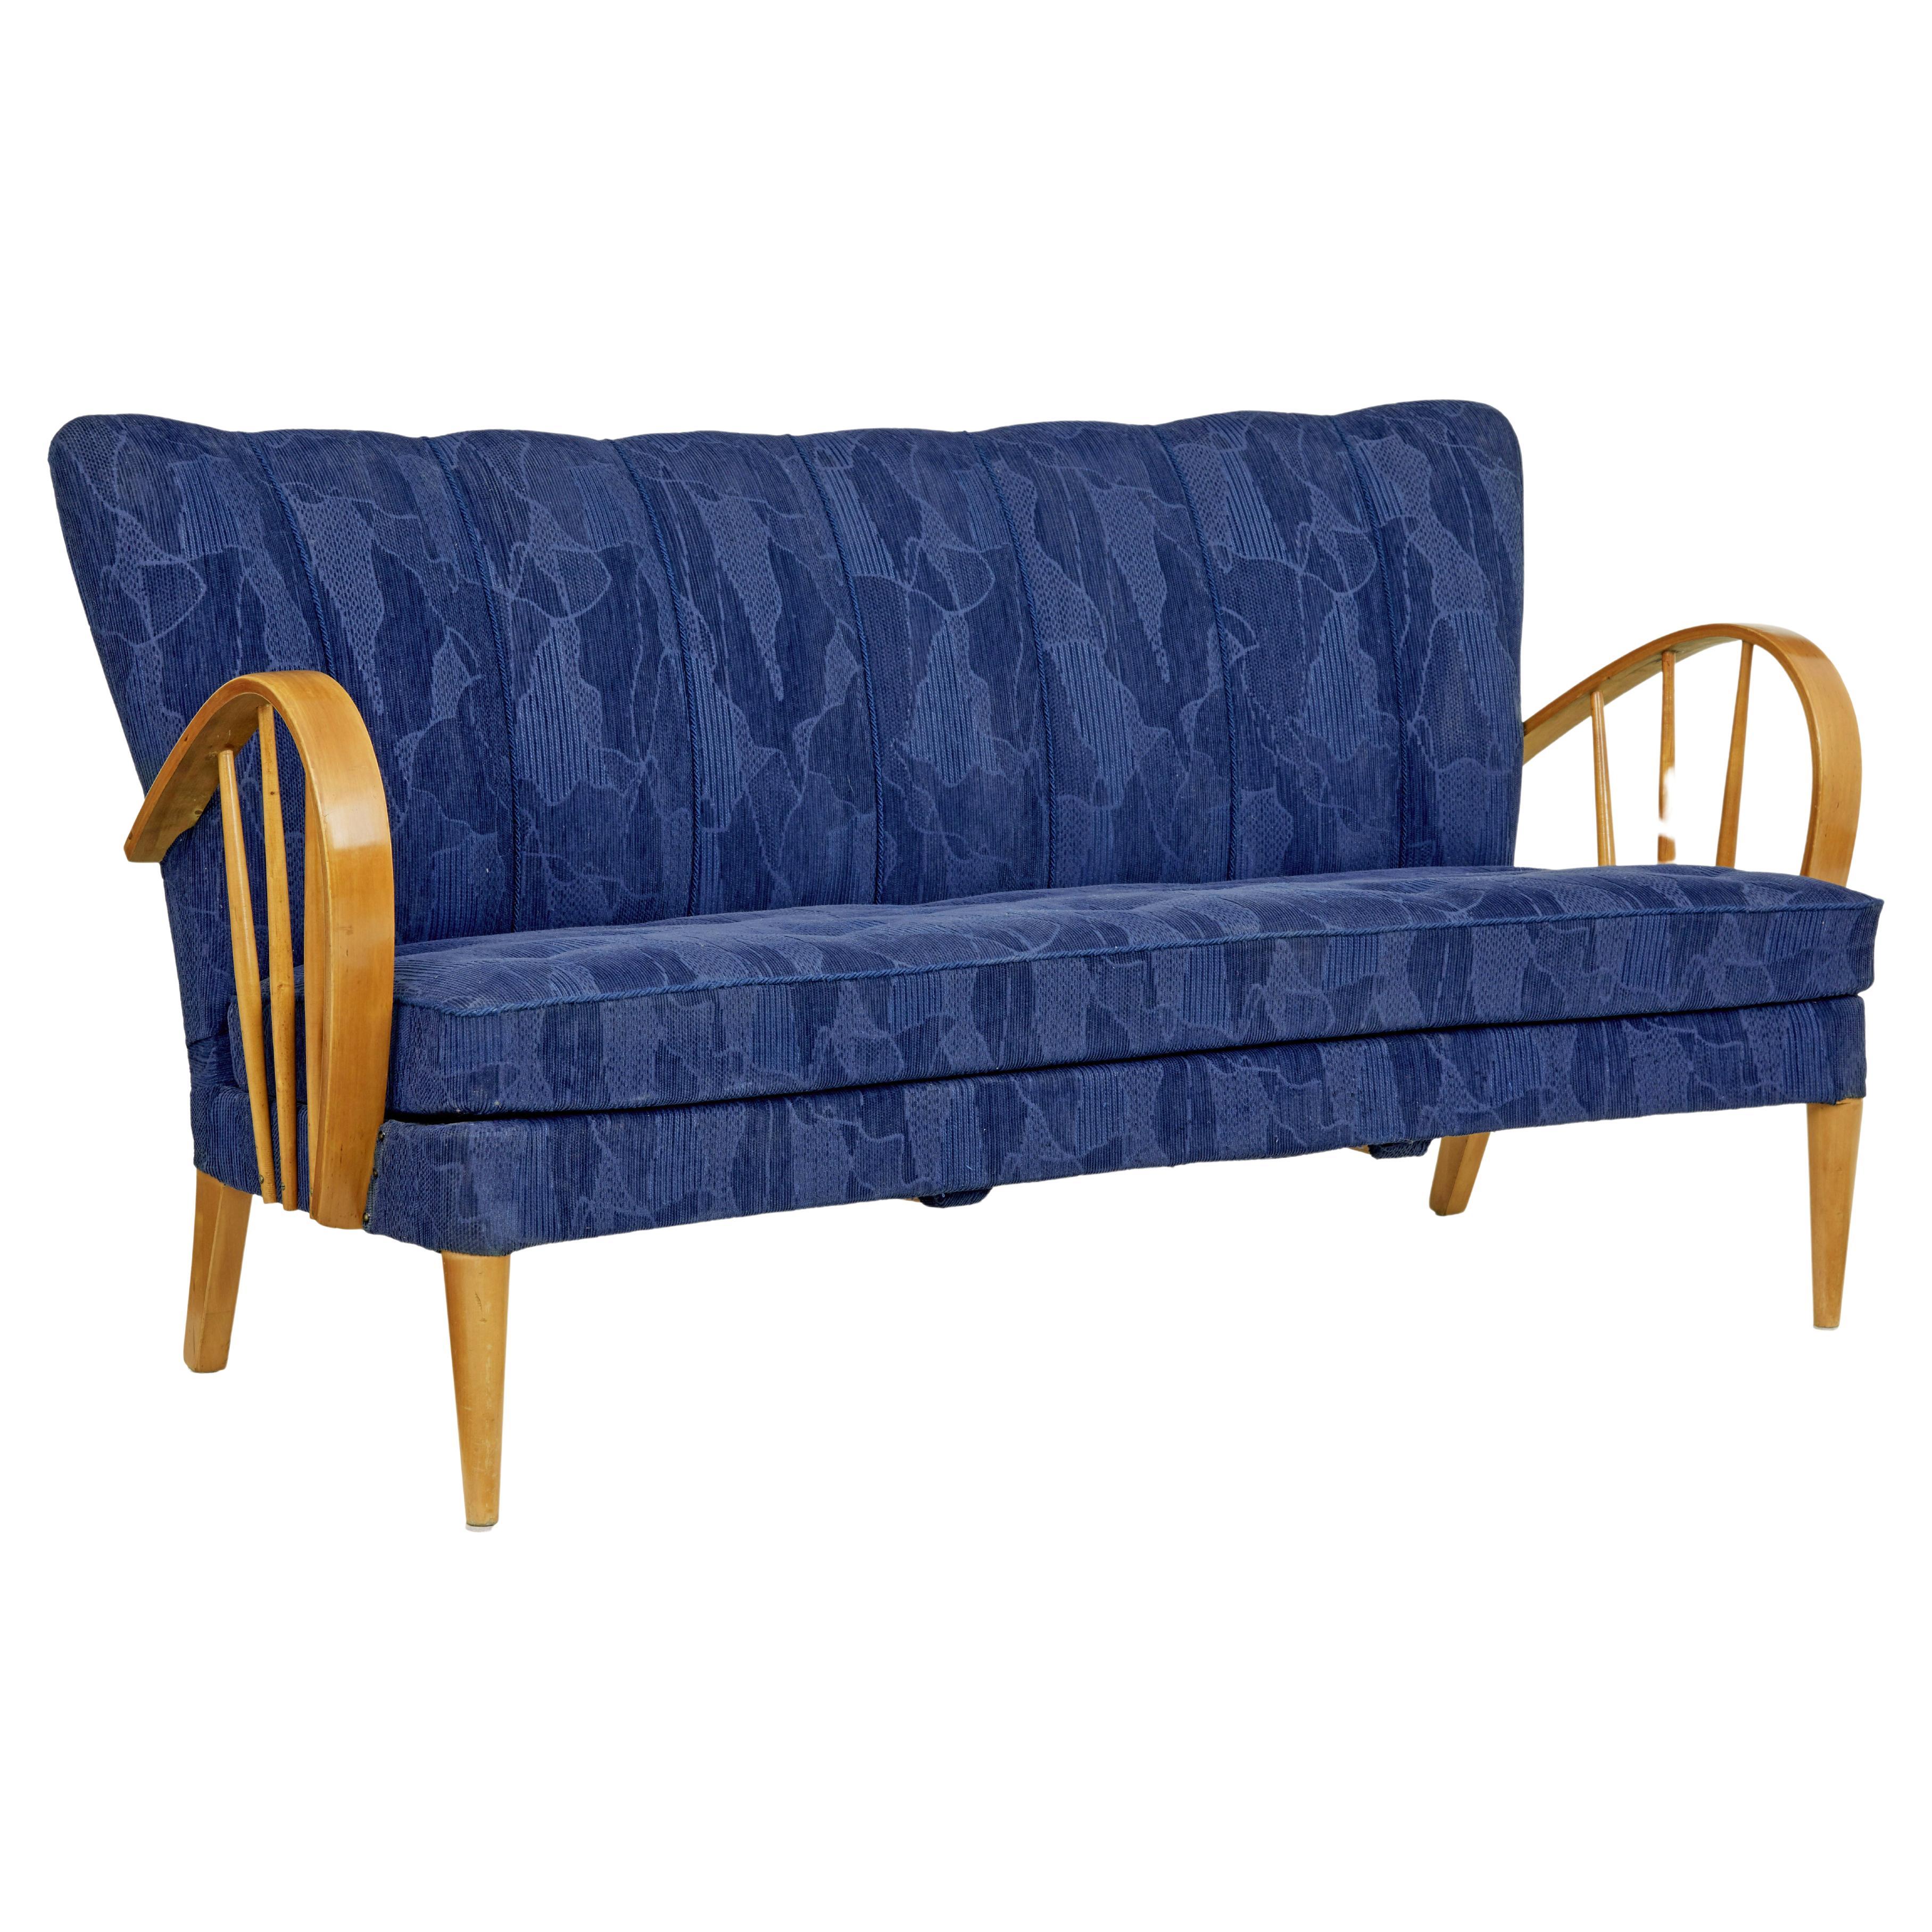 Mid 20th century Scandinavian elm show frame sofa For Sale